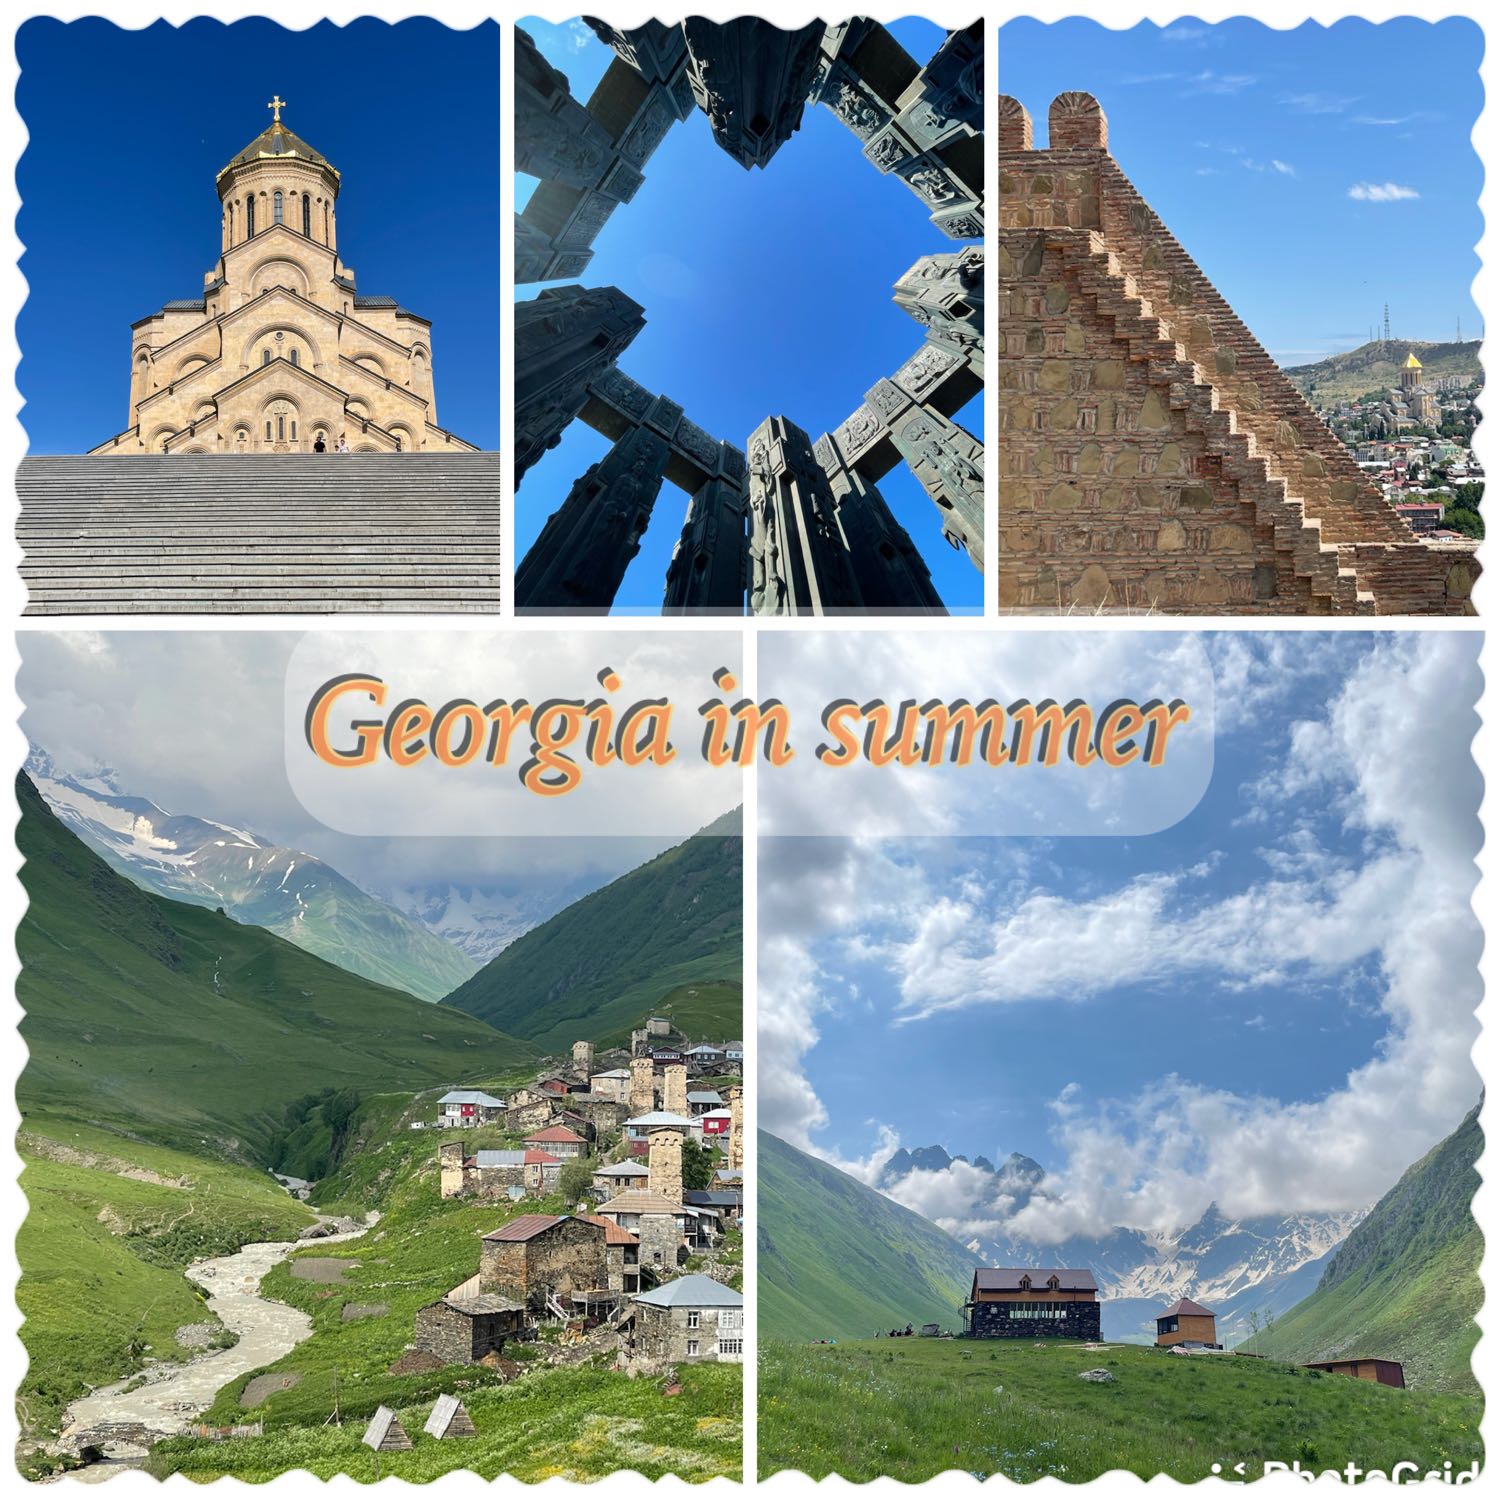 Georgia in summer ] Road trip เช่ารถขับเที่ยวจอร์เจียฤดูร้อน + รีวิวทุกมิติ  - Pantip